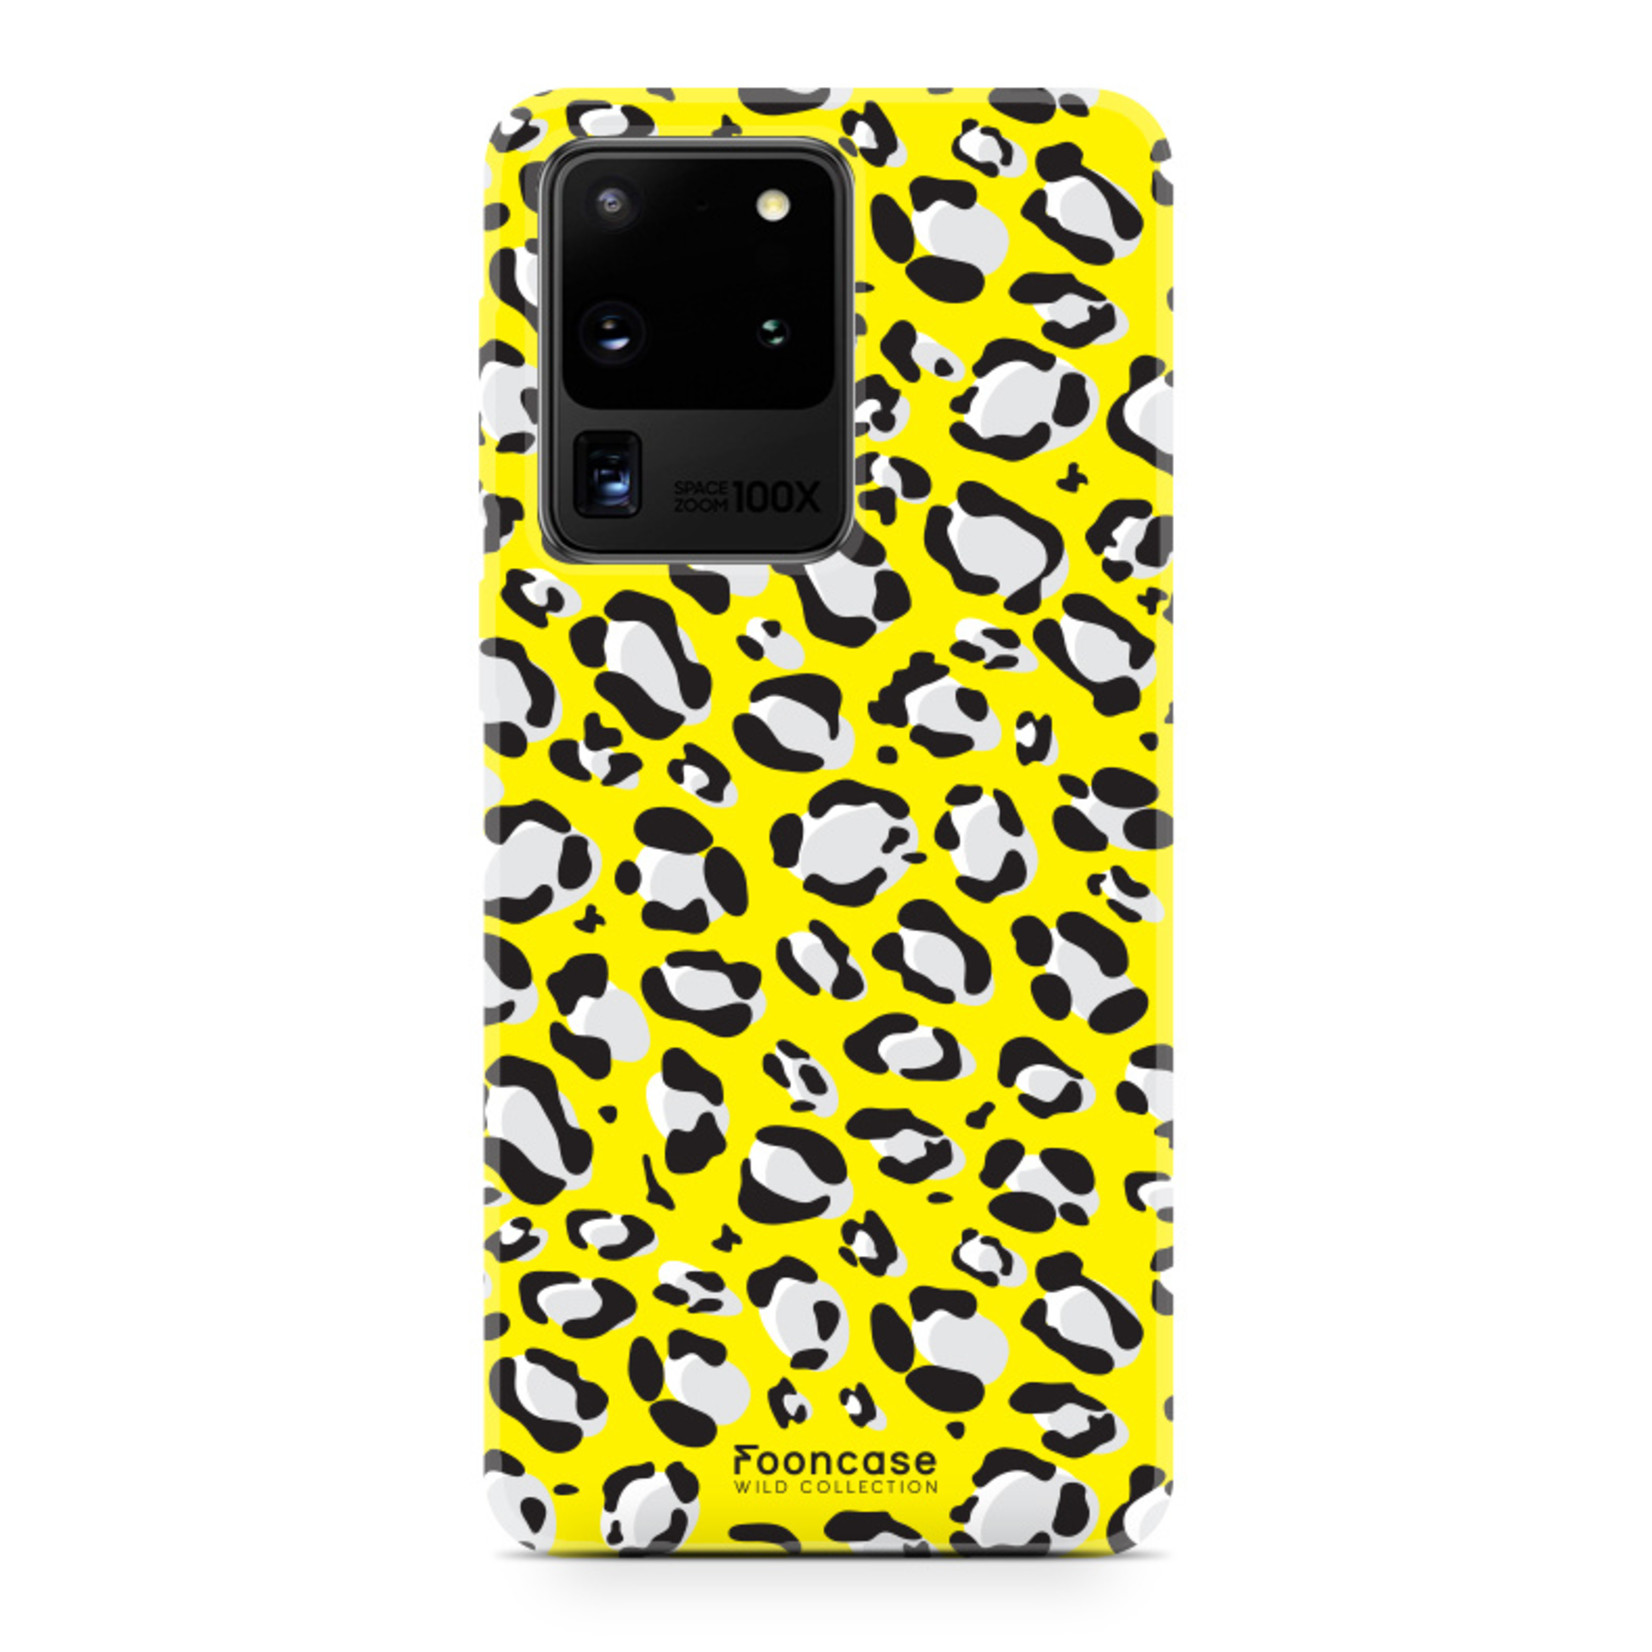 FOONCASE Samsung Galaxy S20 Ultra hoesje TPU Soft Case - Back Cover - Luipaard / Leopard print / Geel